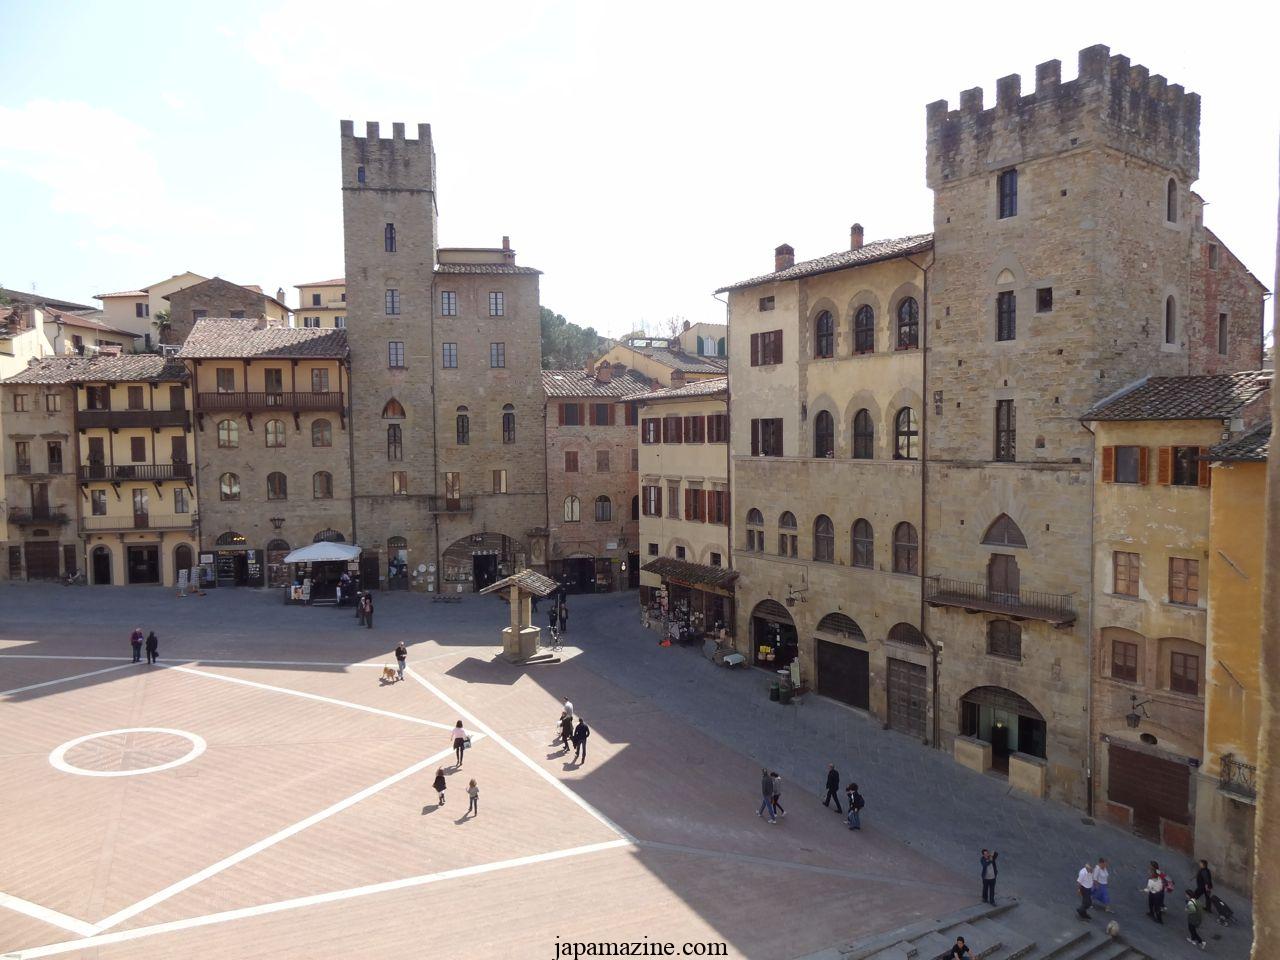 Arezzo, Italy: The Enchanting Medieval City!